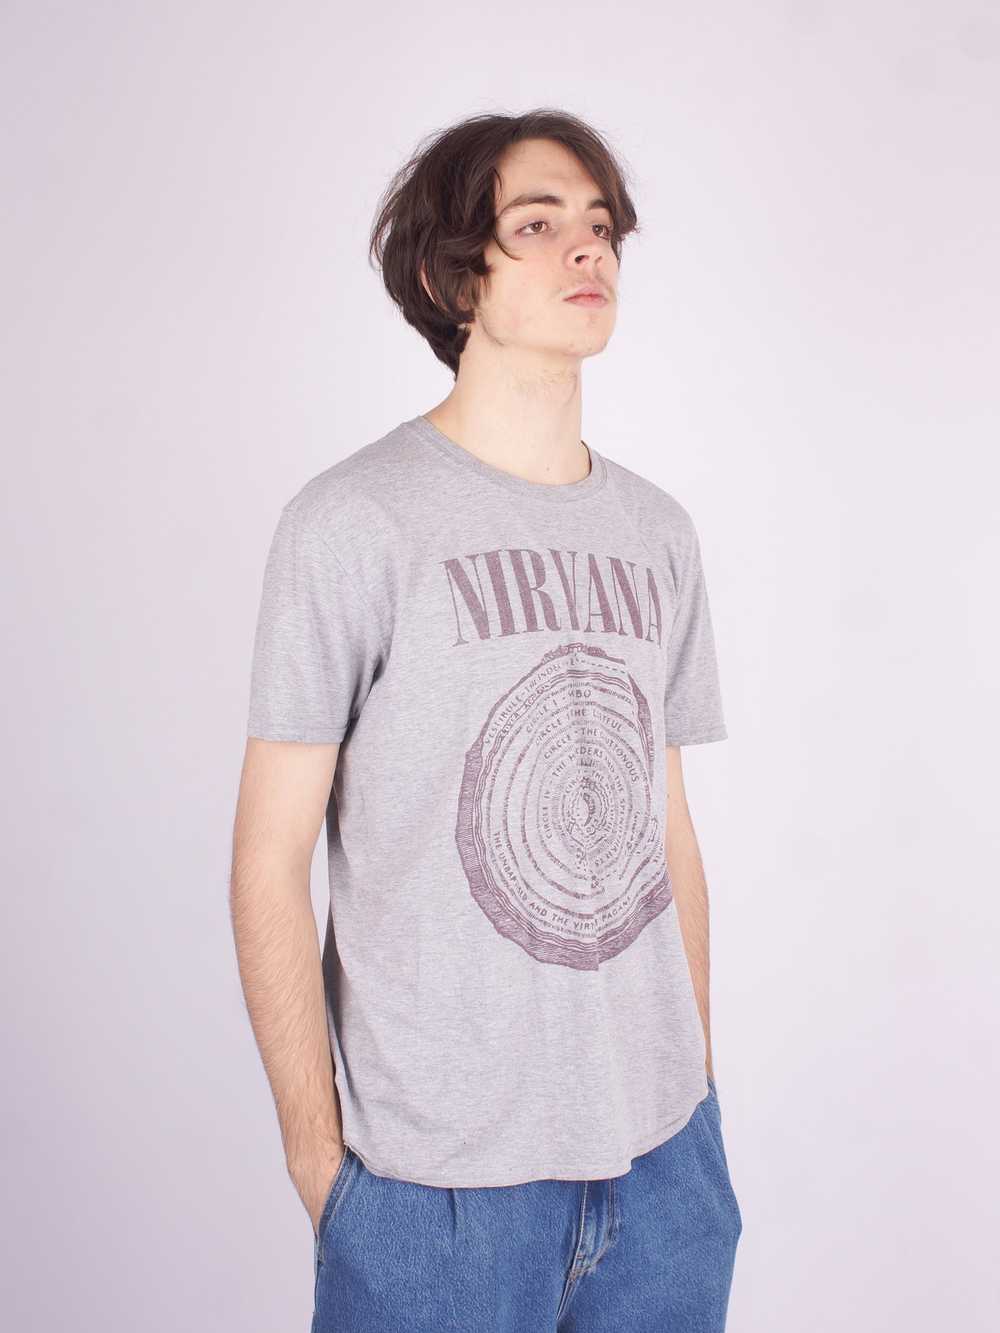 Band Tees × Nirvana 2017 Nirvana T Shirt - image 1